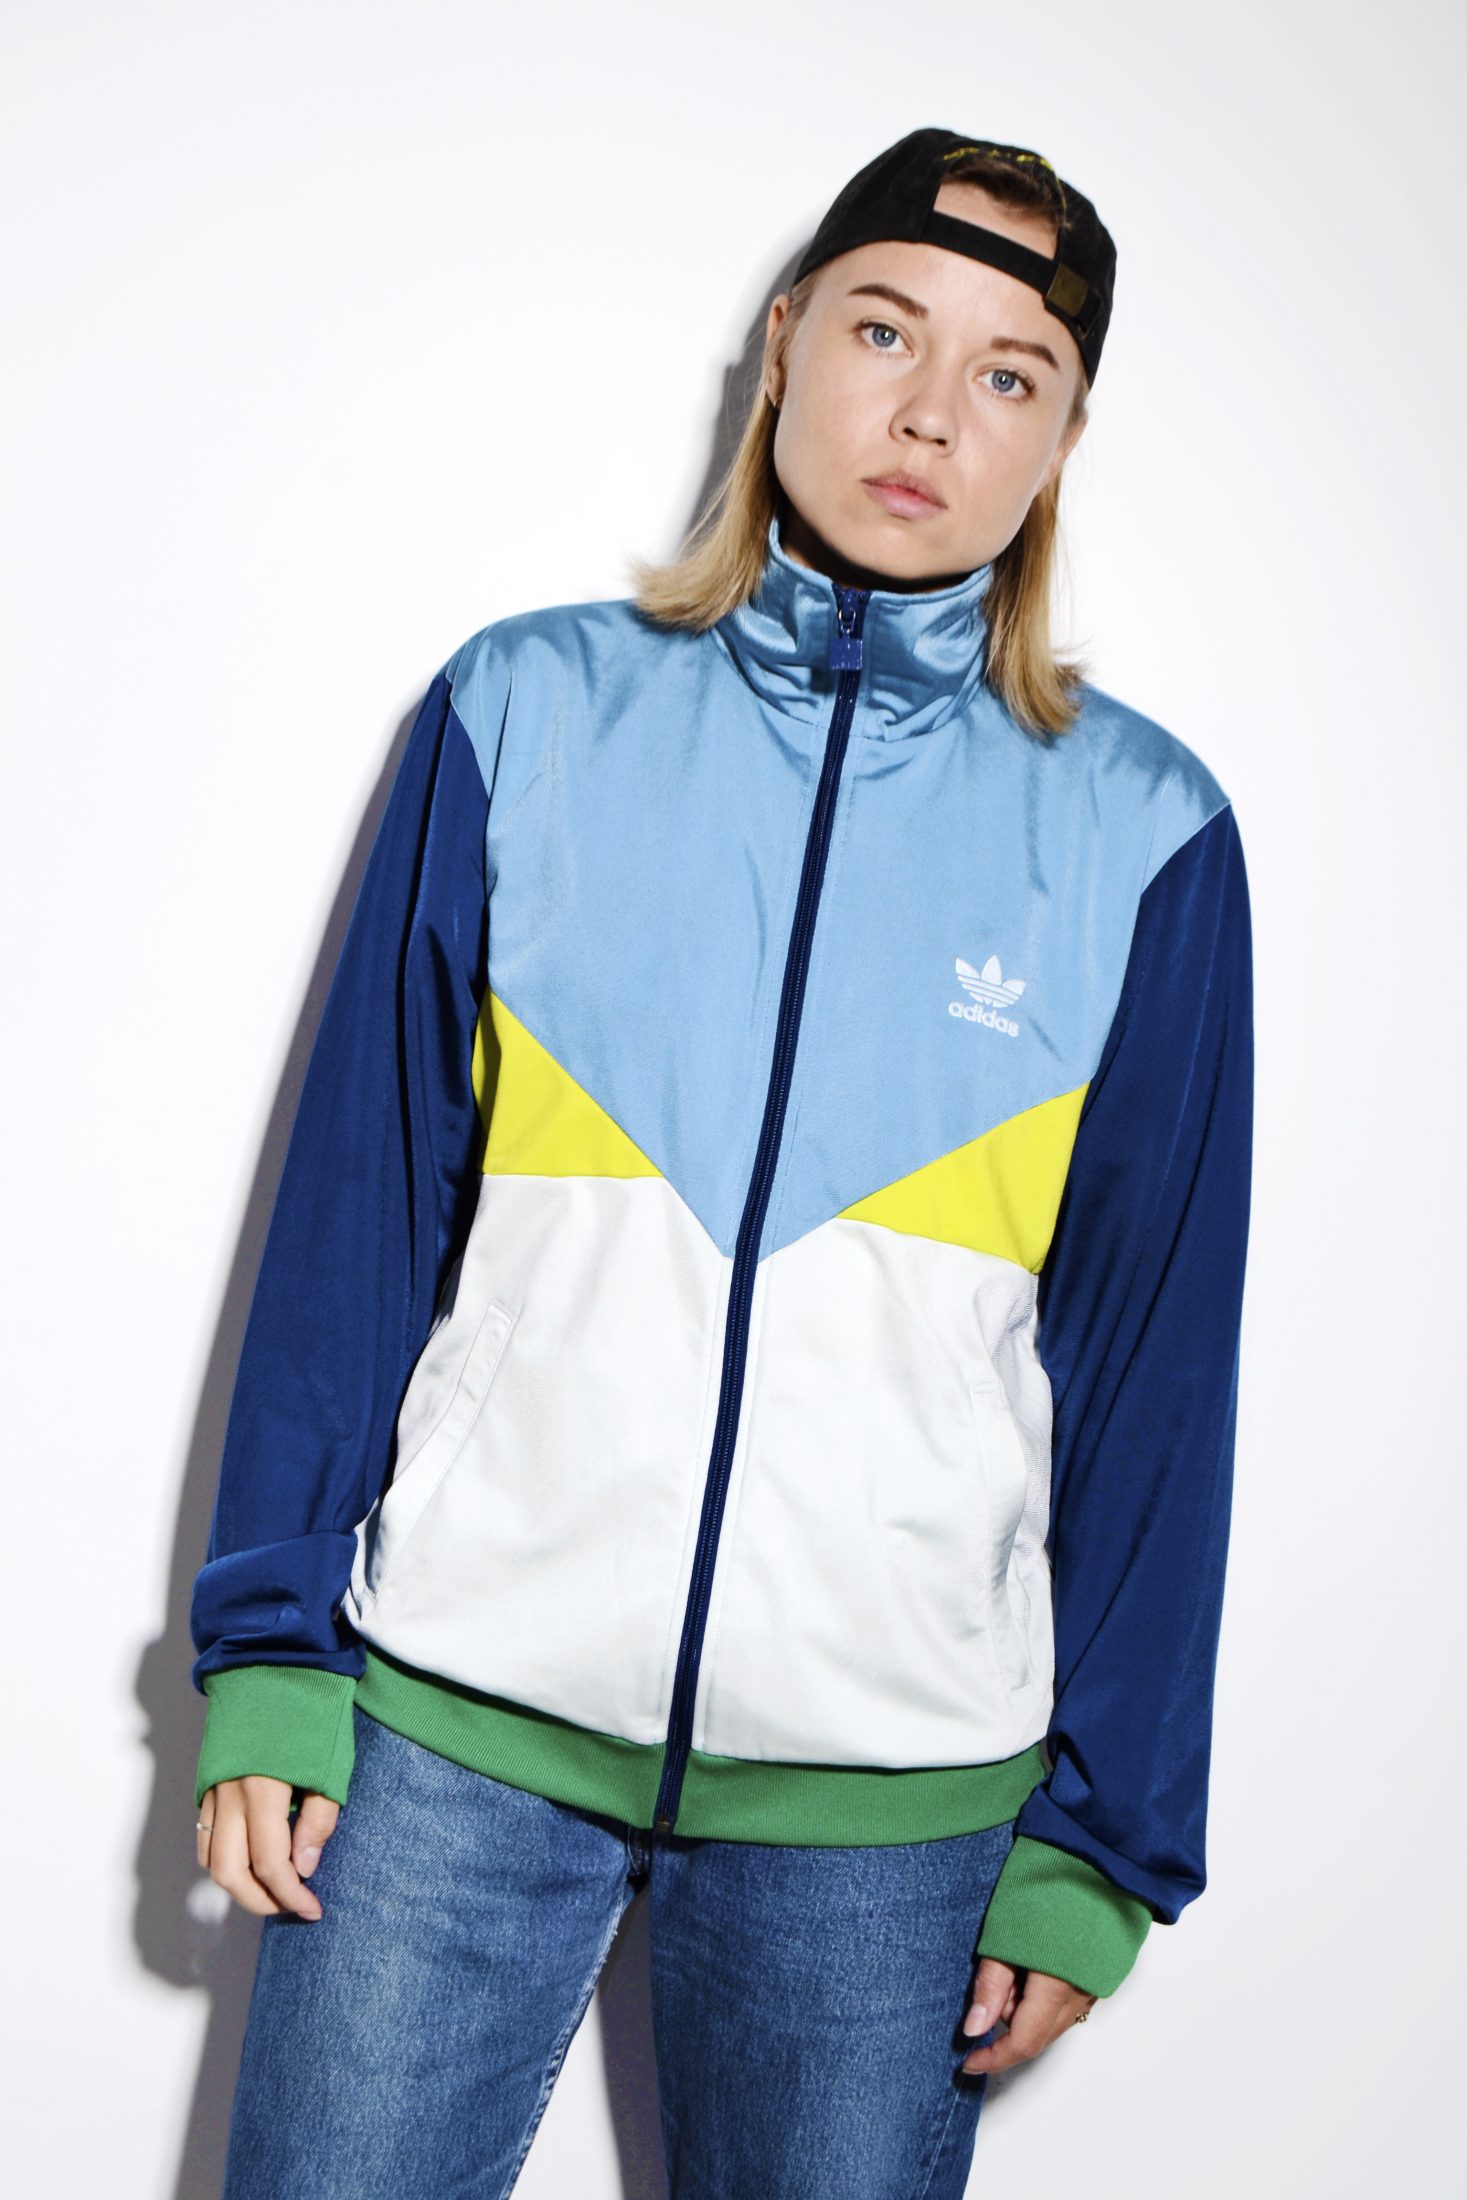 Adidas Originals colour blocking jacket | HOT MILK 90s clothing online